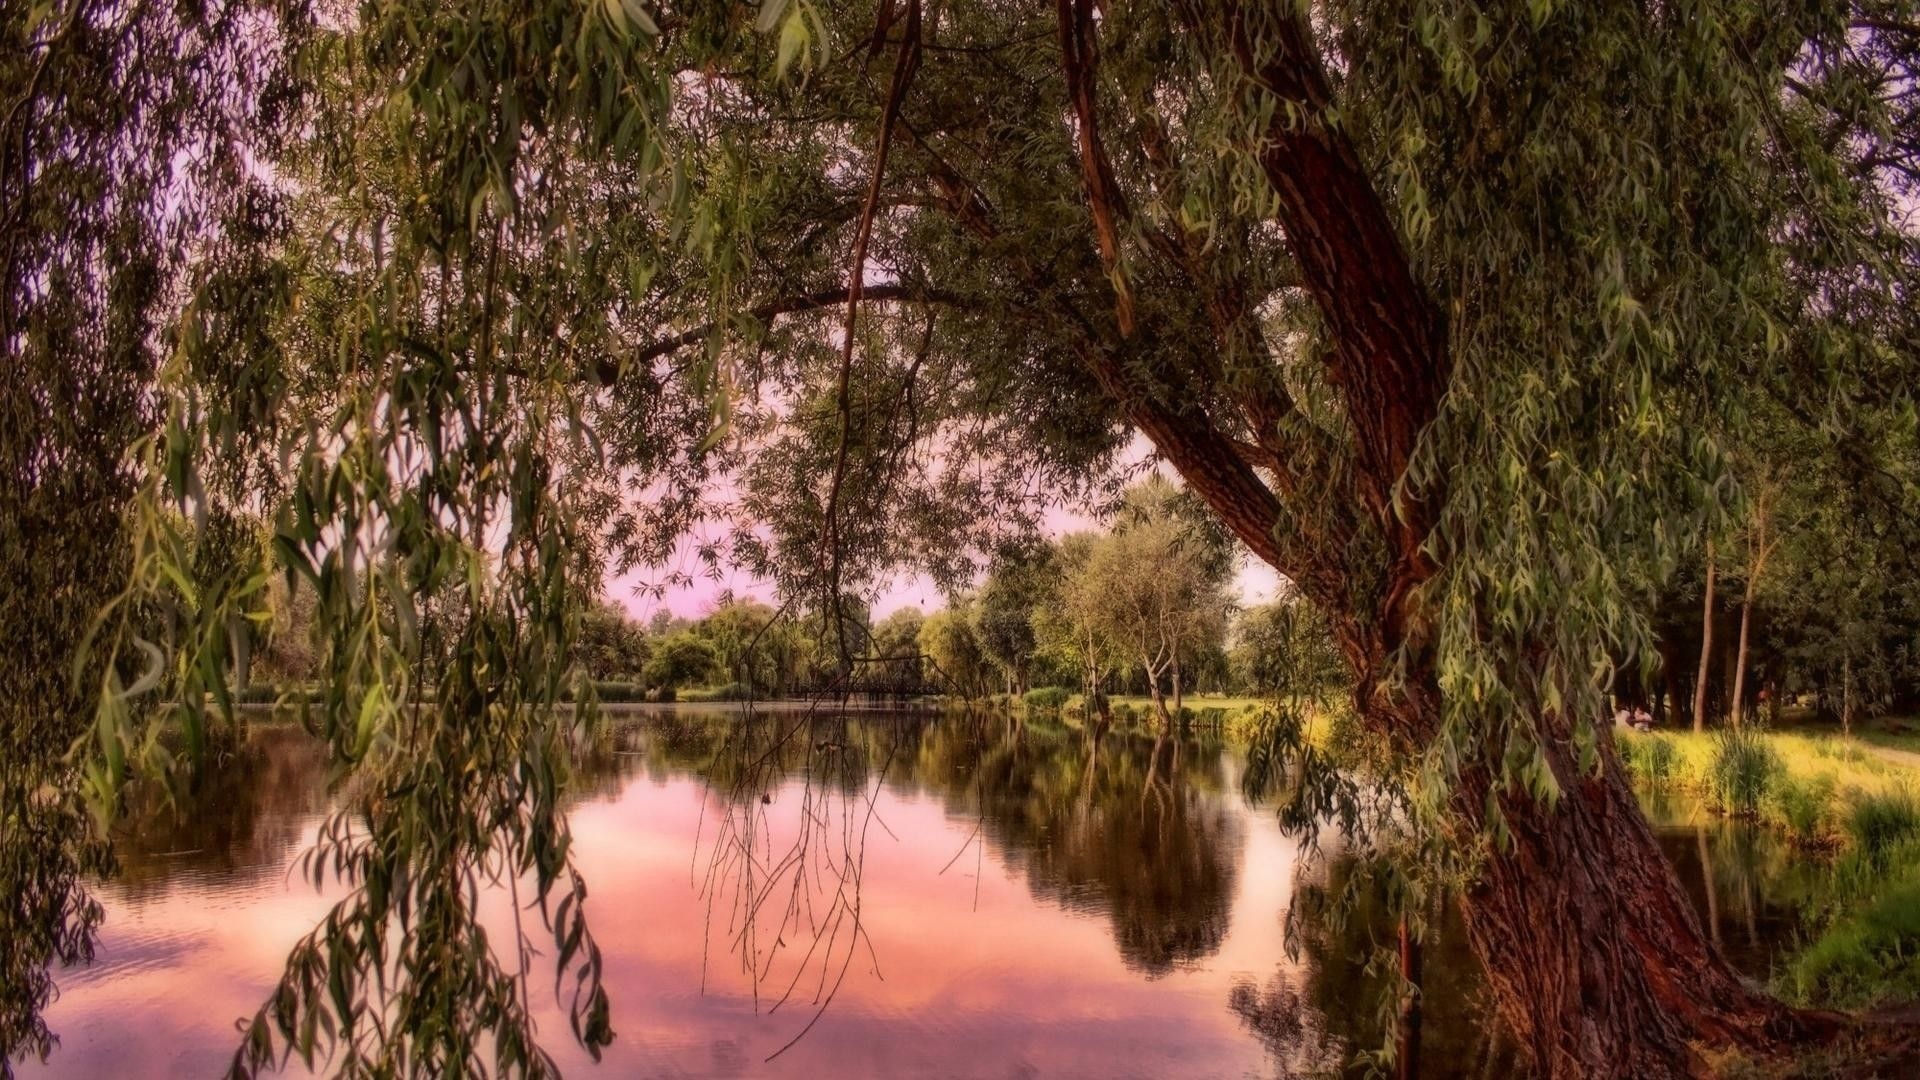 Willow tree wallpapers, Nature's elegance, Serene beauty, Enchanting atmosphere, 1920x1080 Full HD Desktop